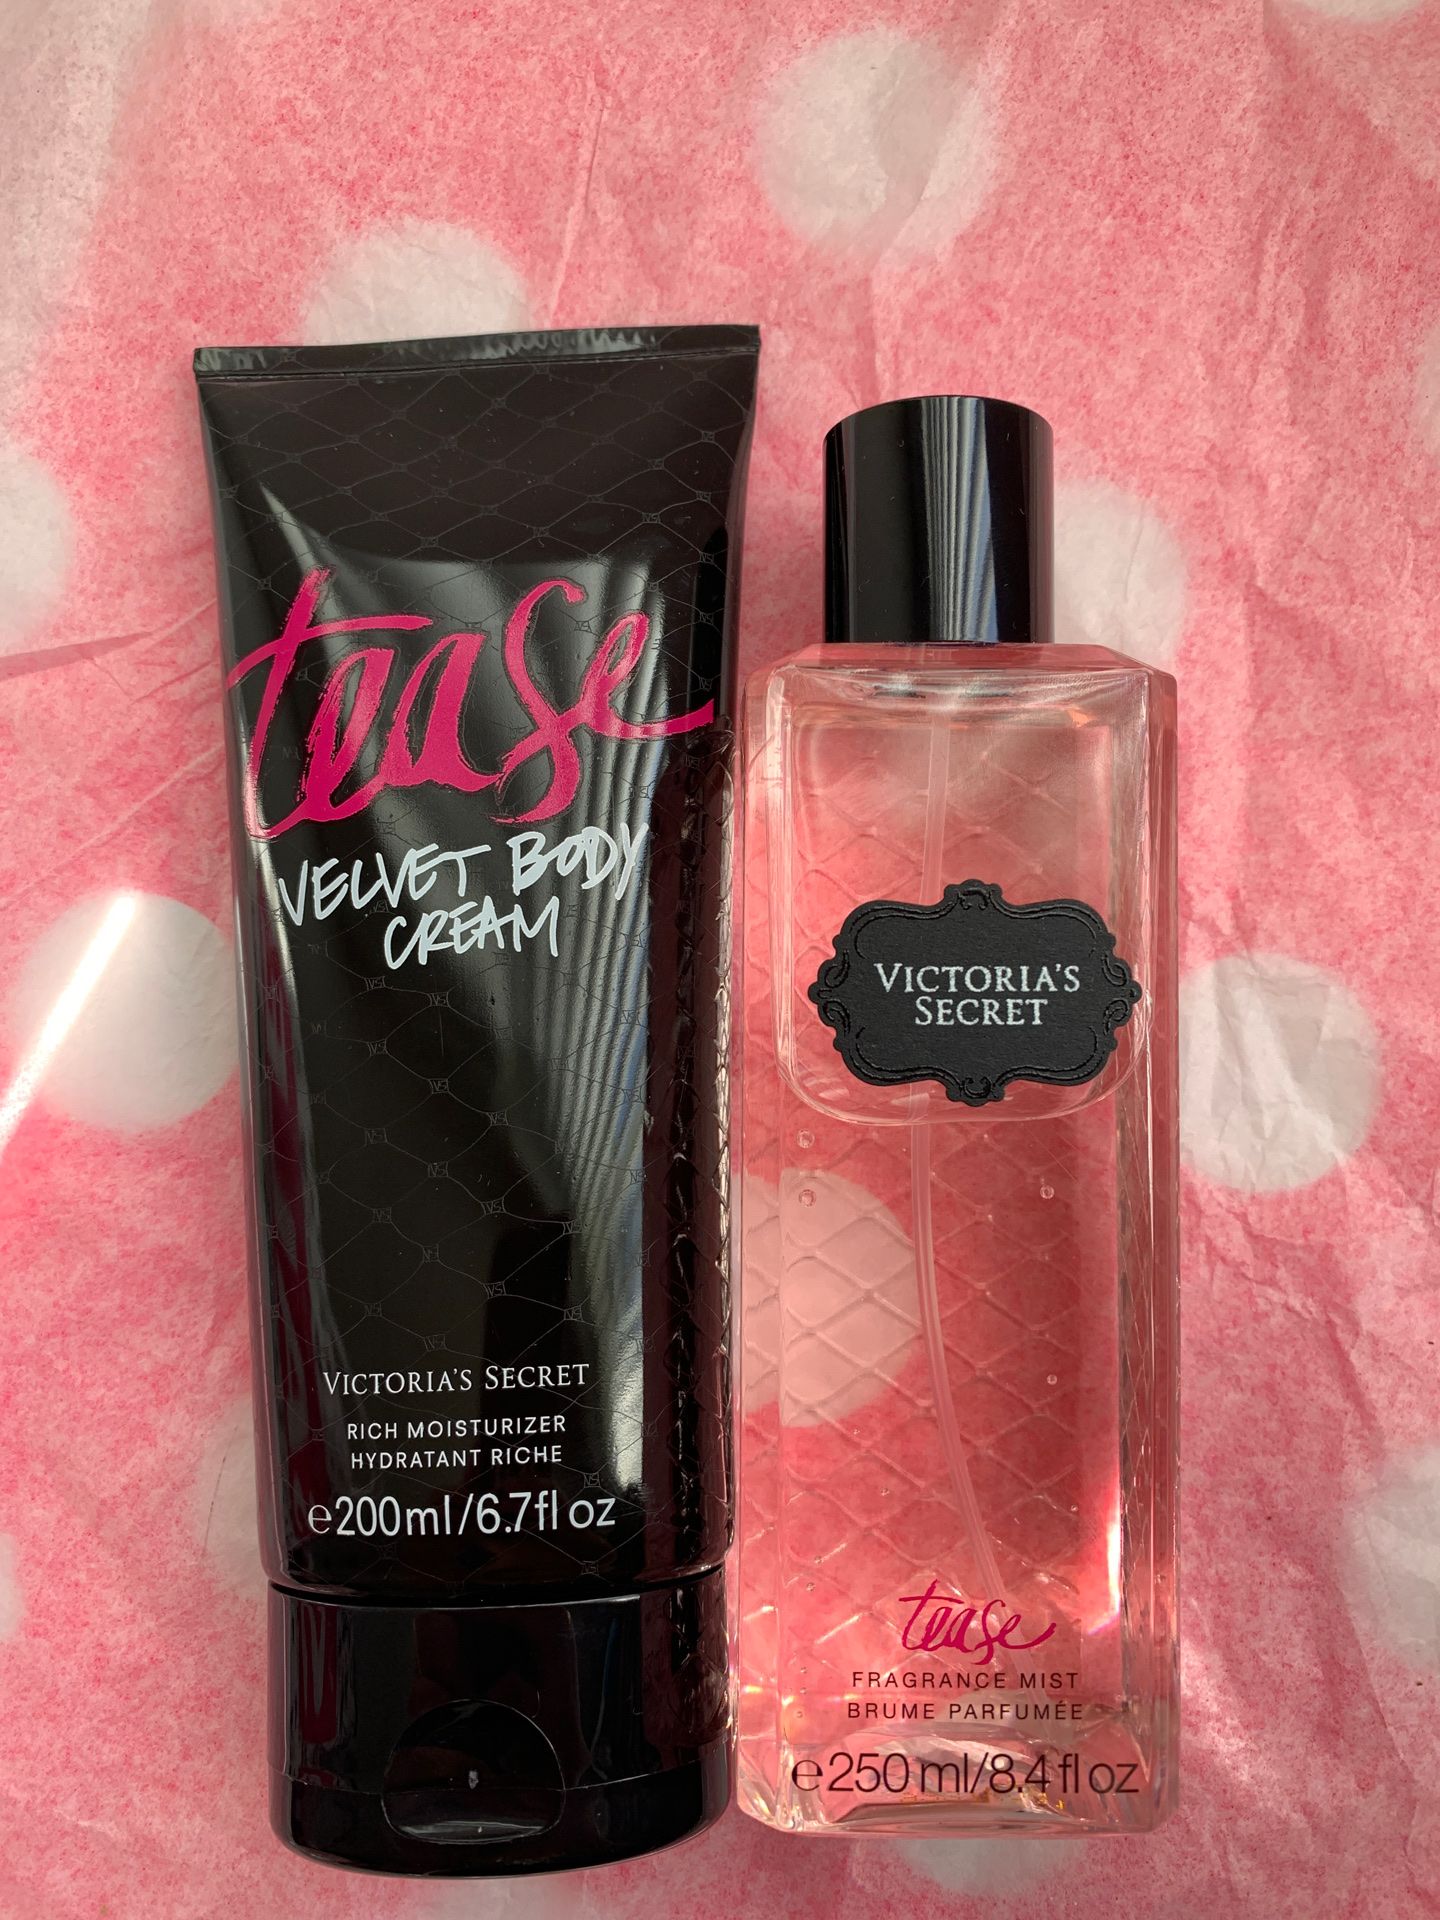 Victoria’s Secret tease fragrance mist and body cream set for $20